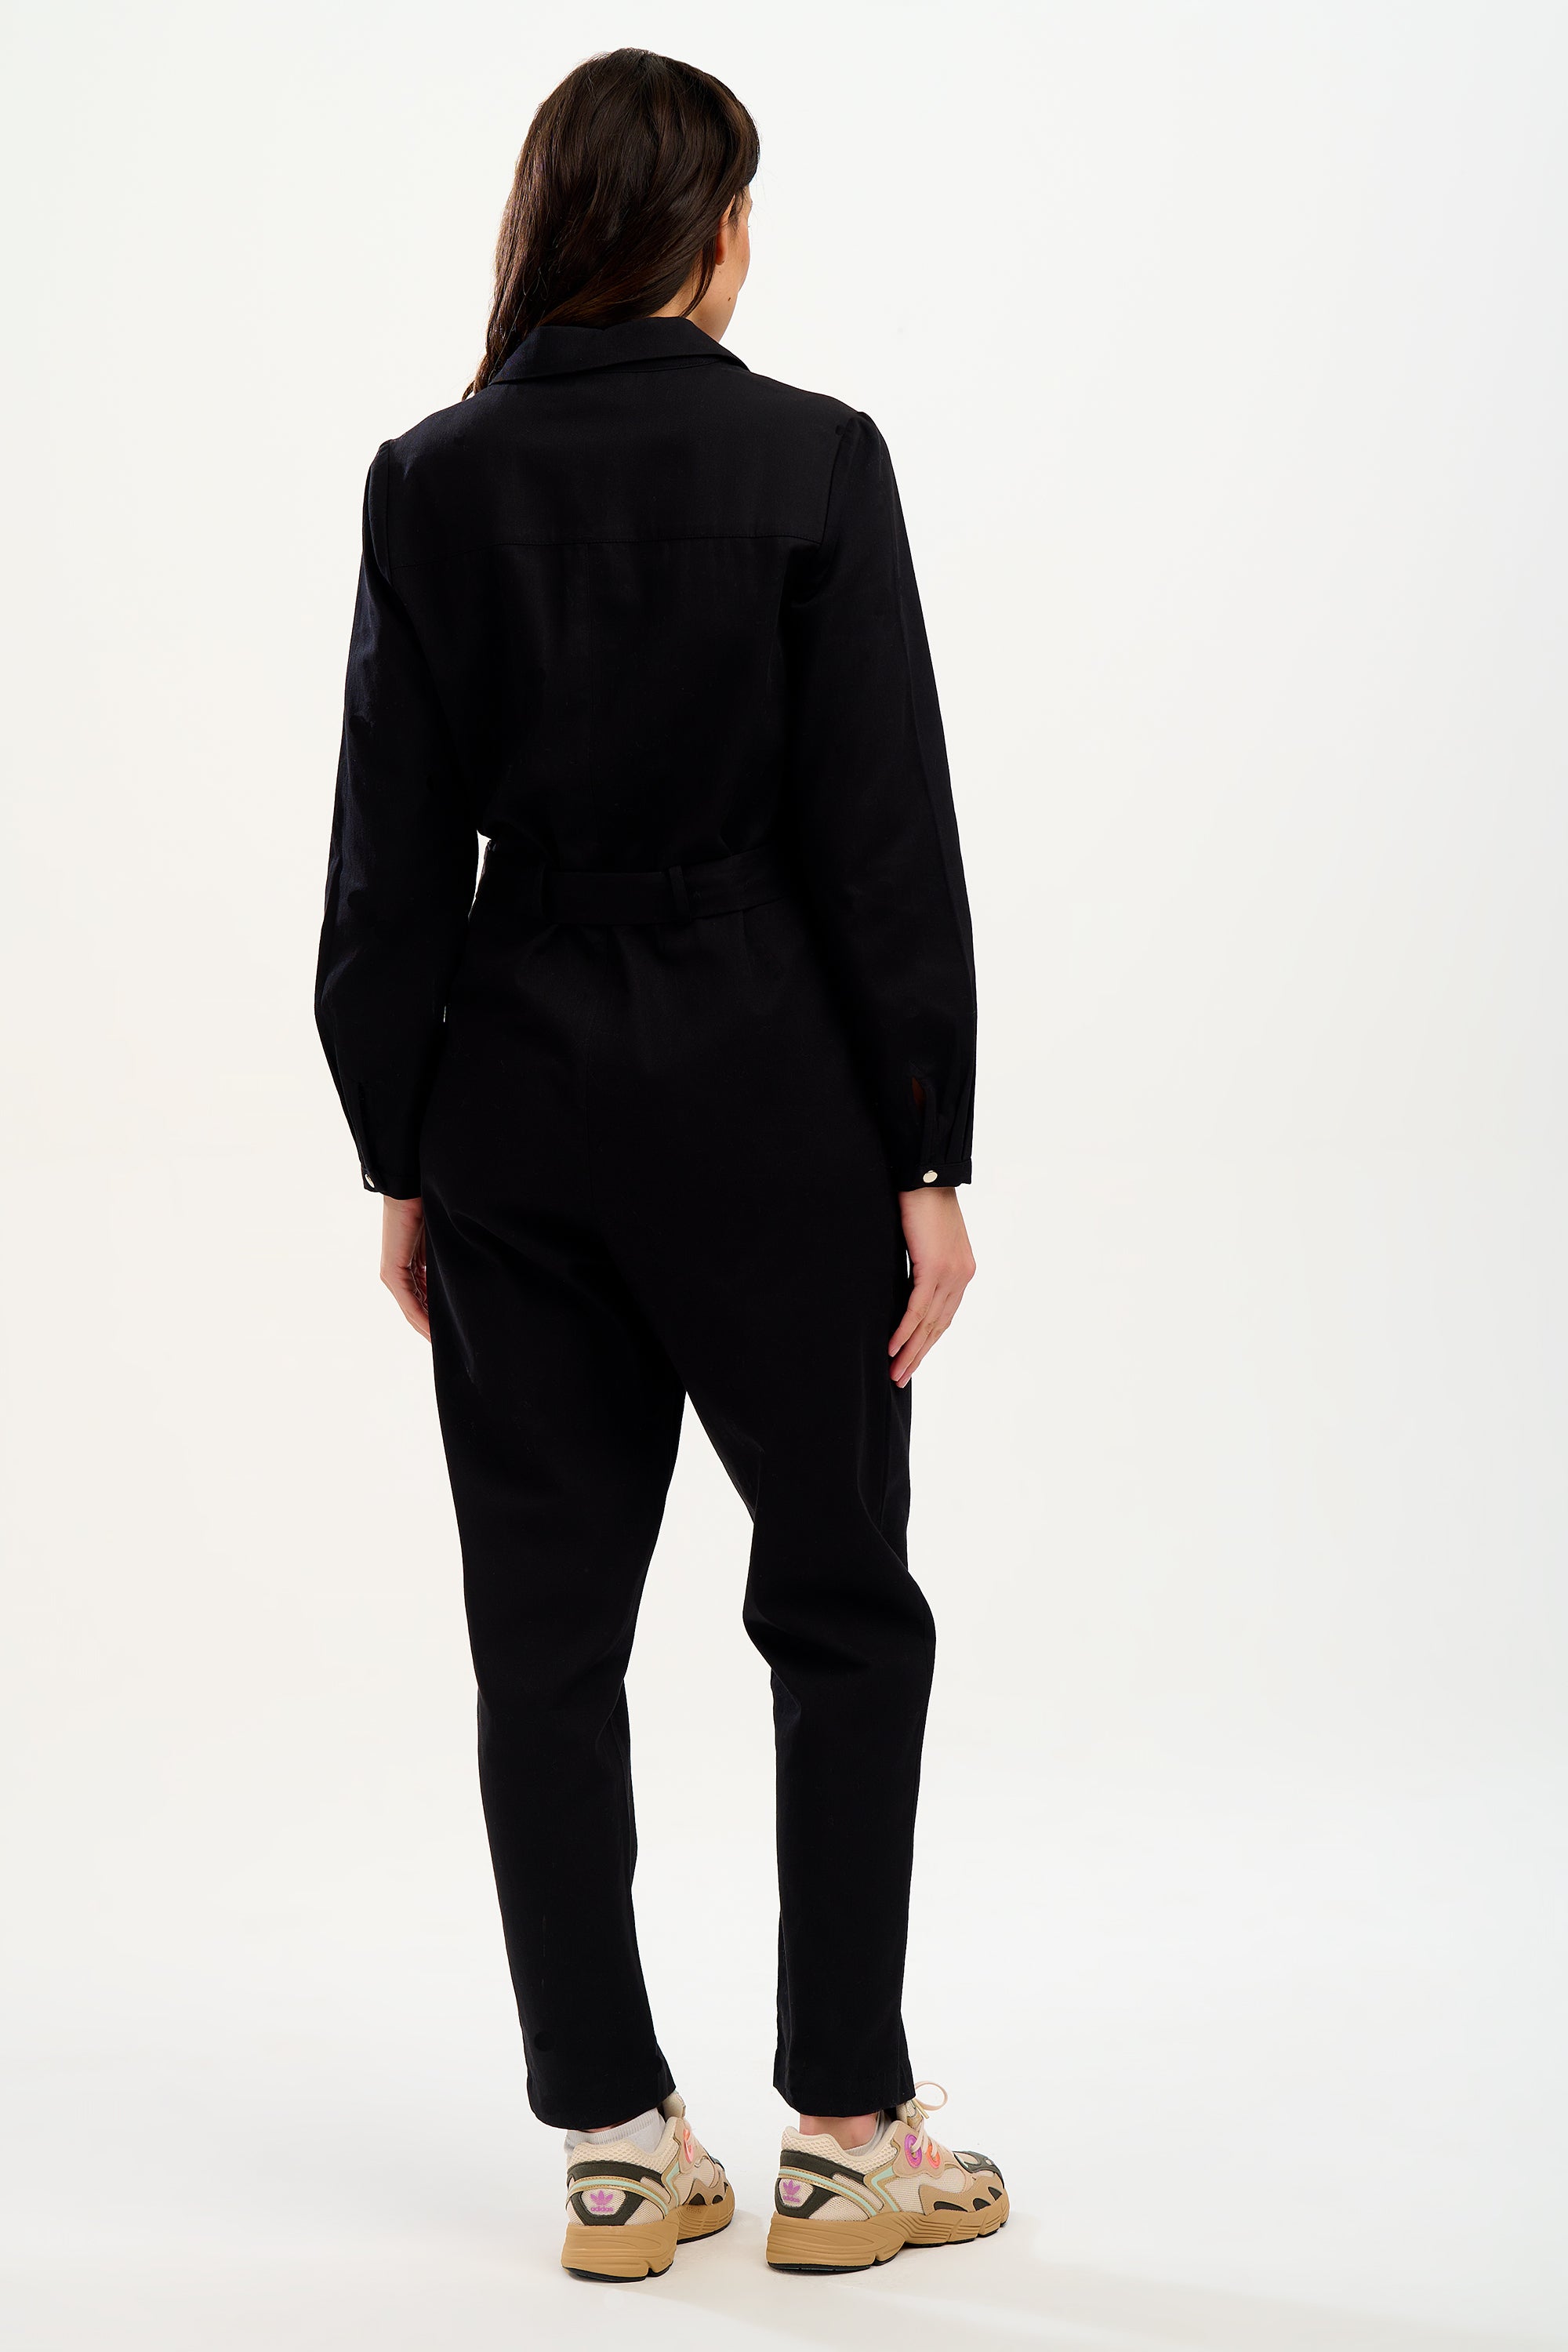 Anwen Black Boiler Suit | Sugarhill Brighton